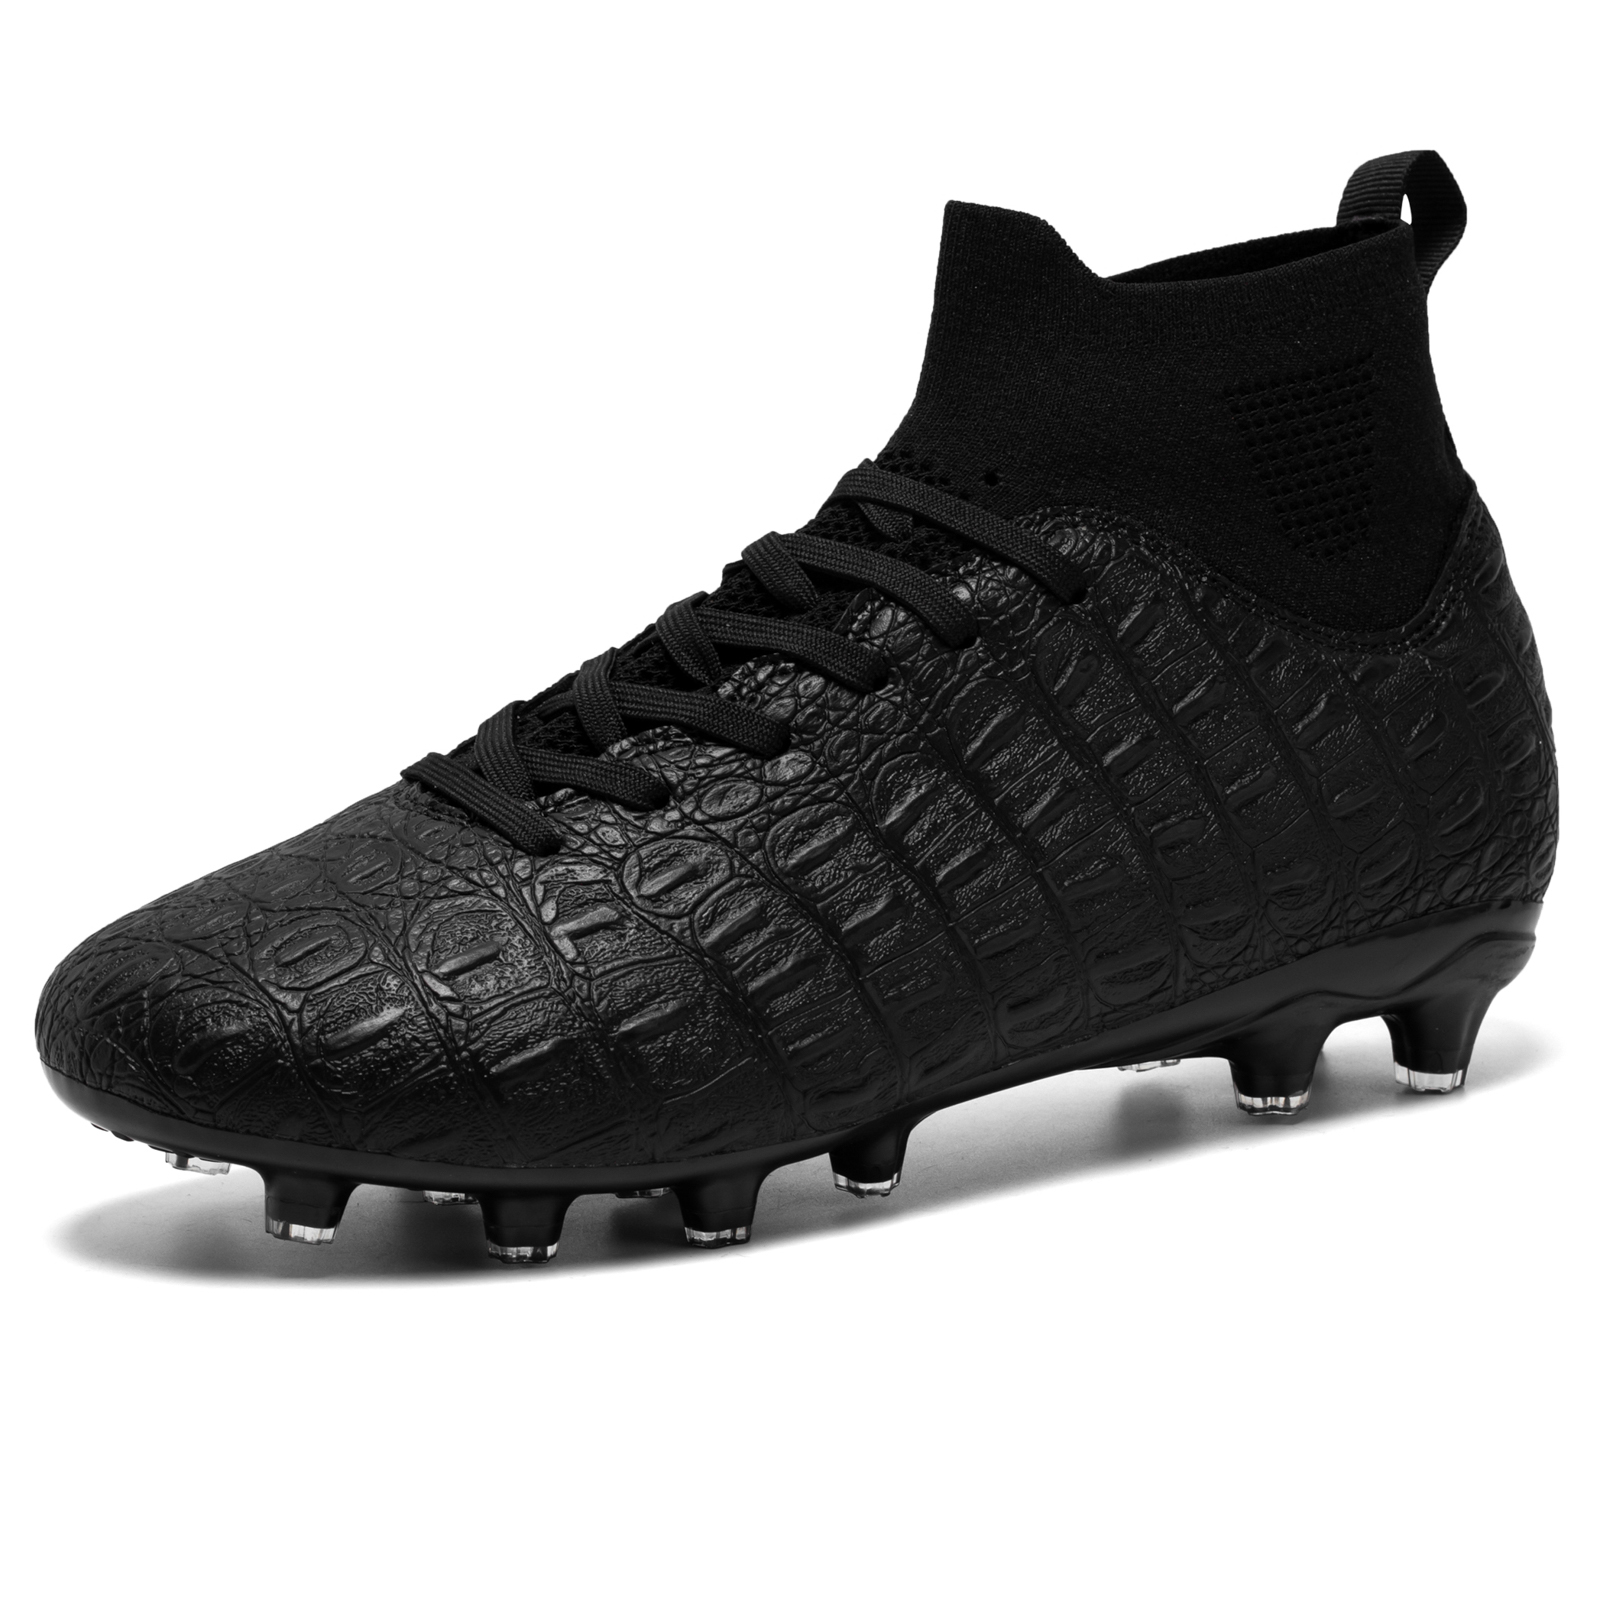 Men's Professional TPU Outsole Soccer Shoes Football Shoe for Men